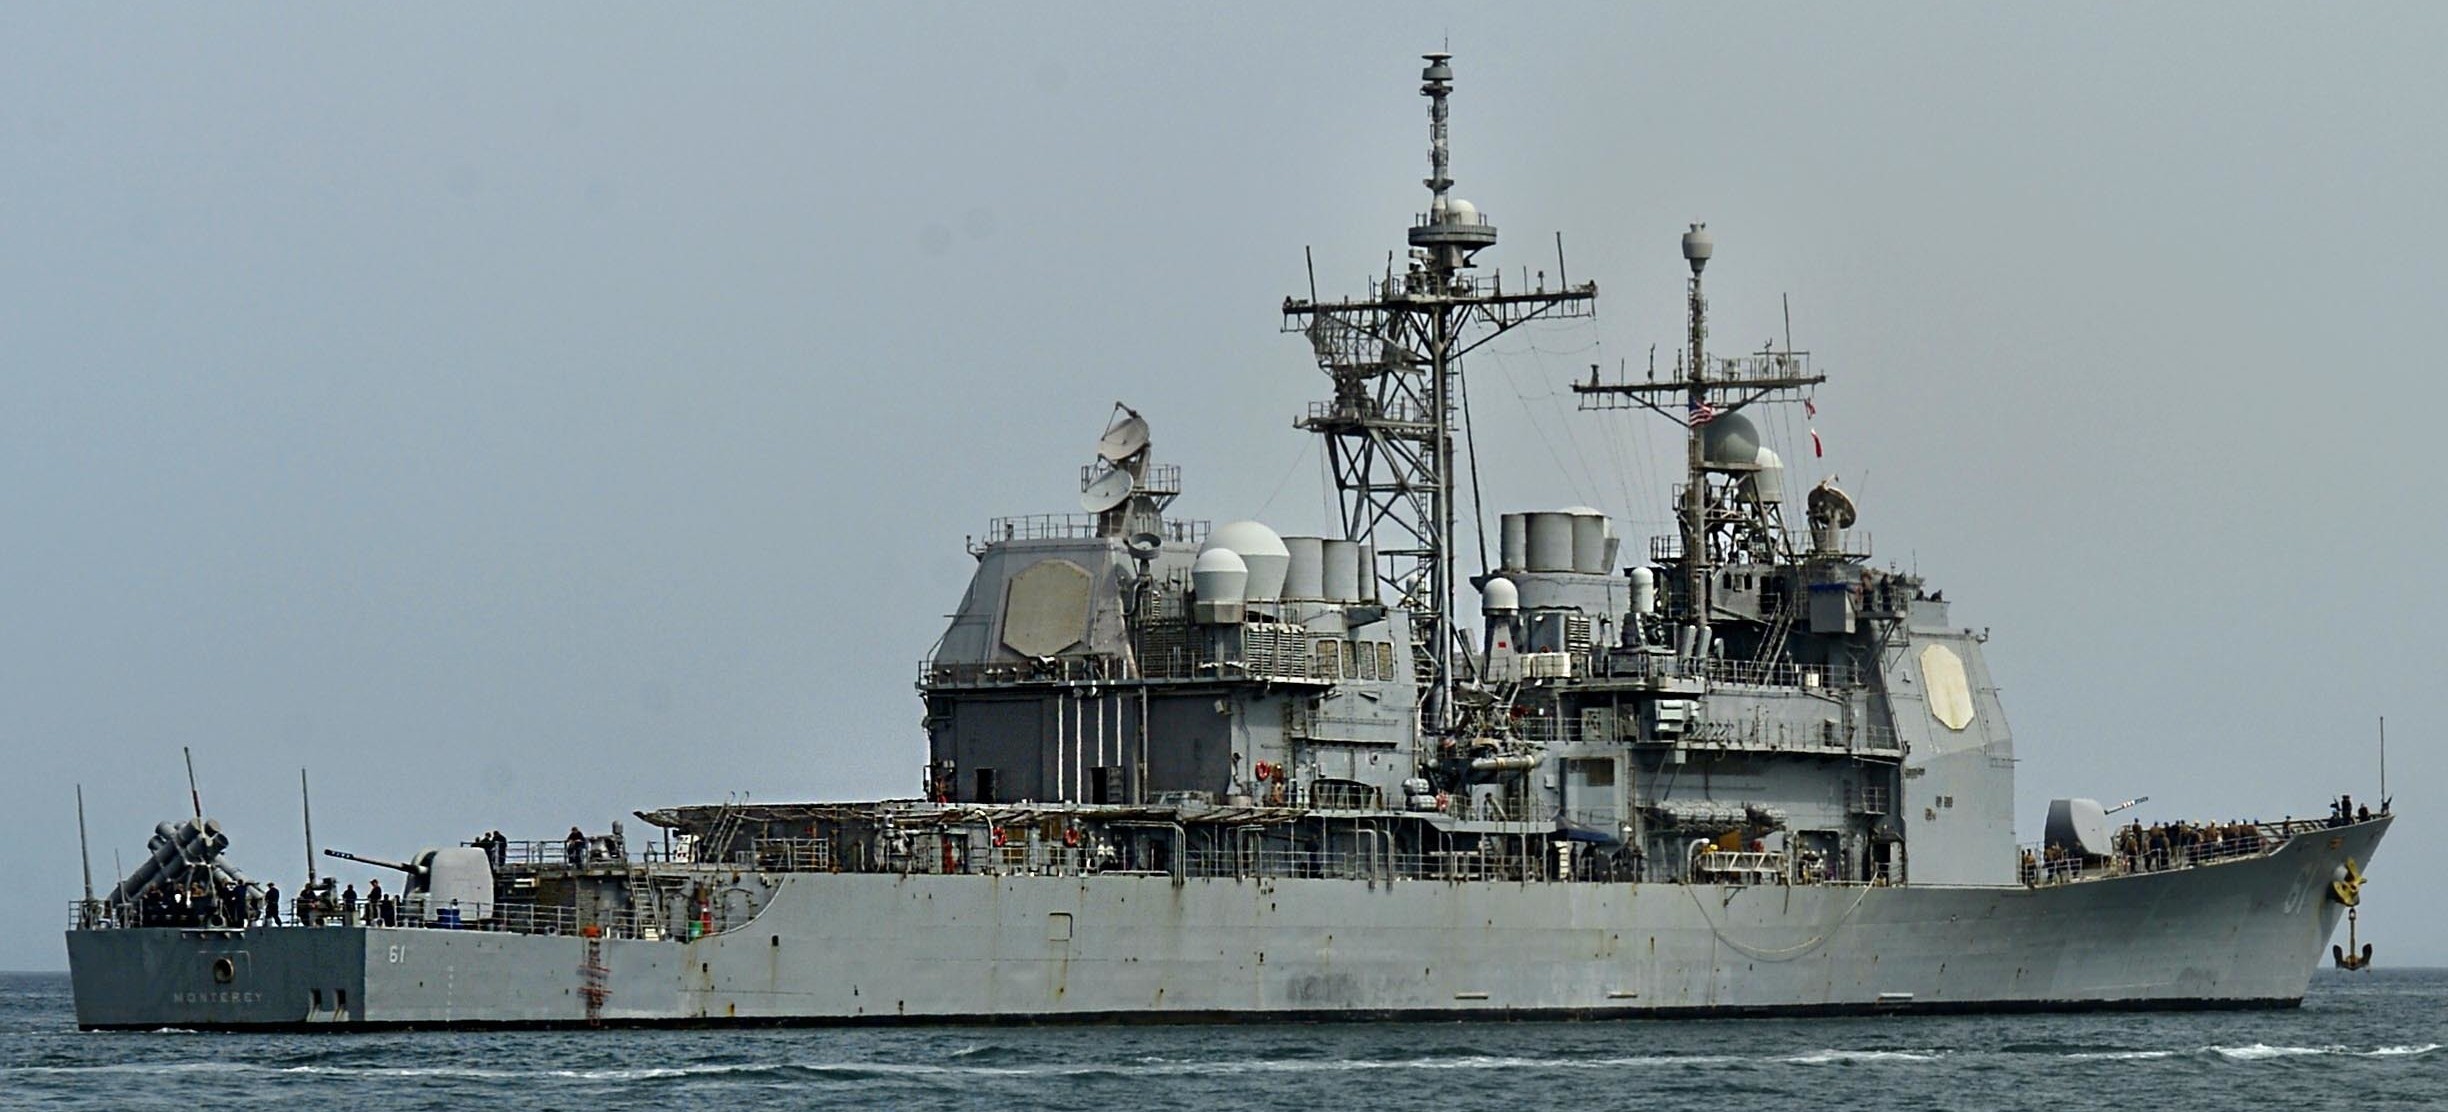 cg-61 uss monterey ticonderoga class guided missile cruiser aegis us navy 116